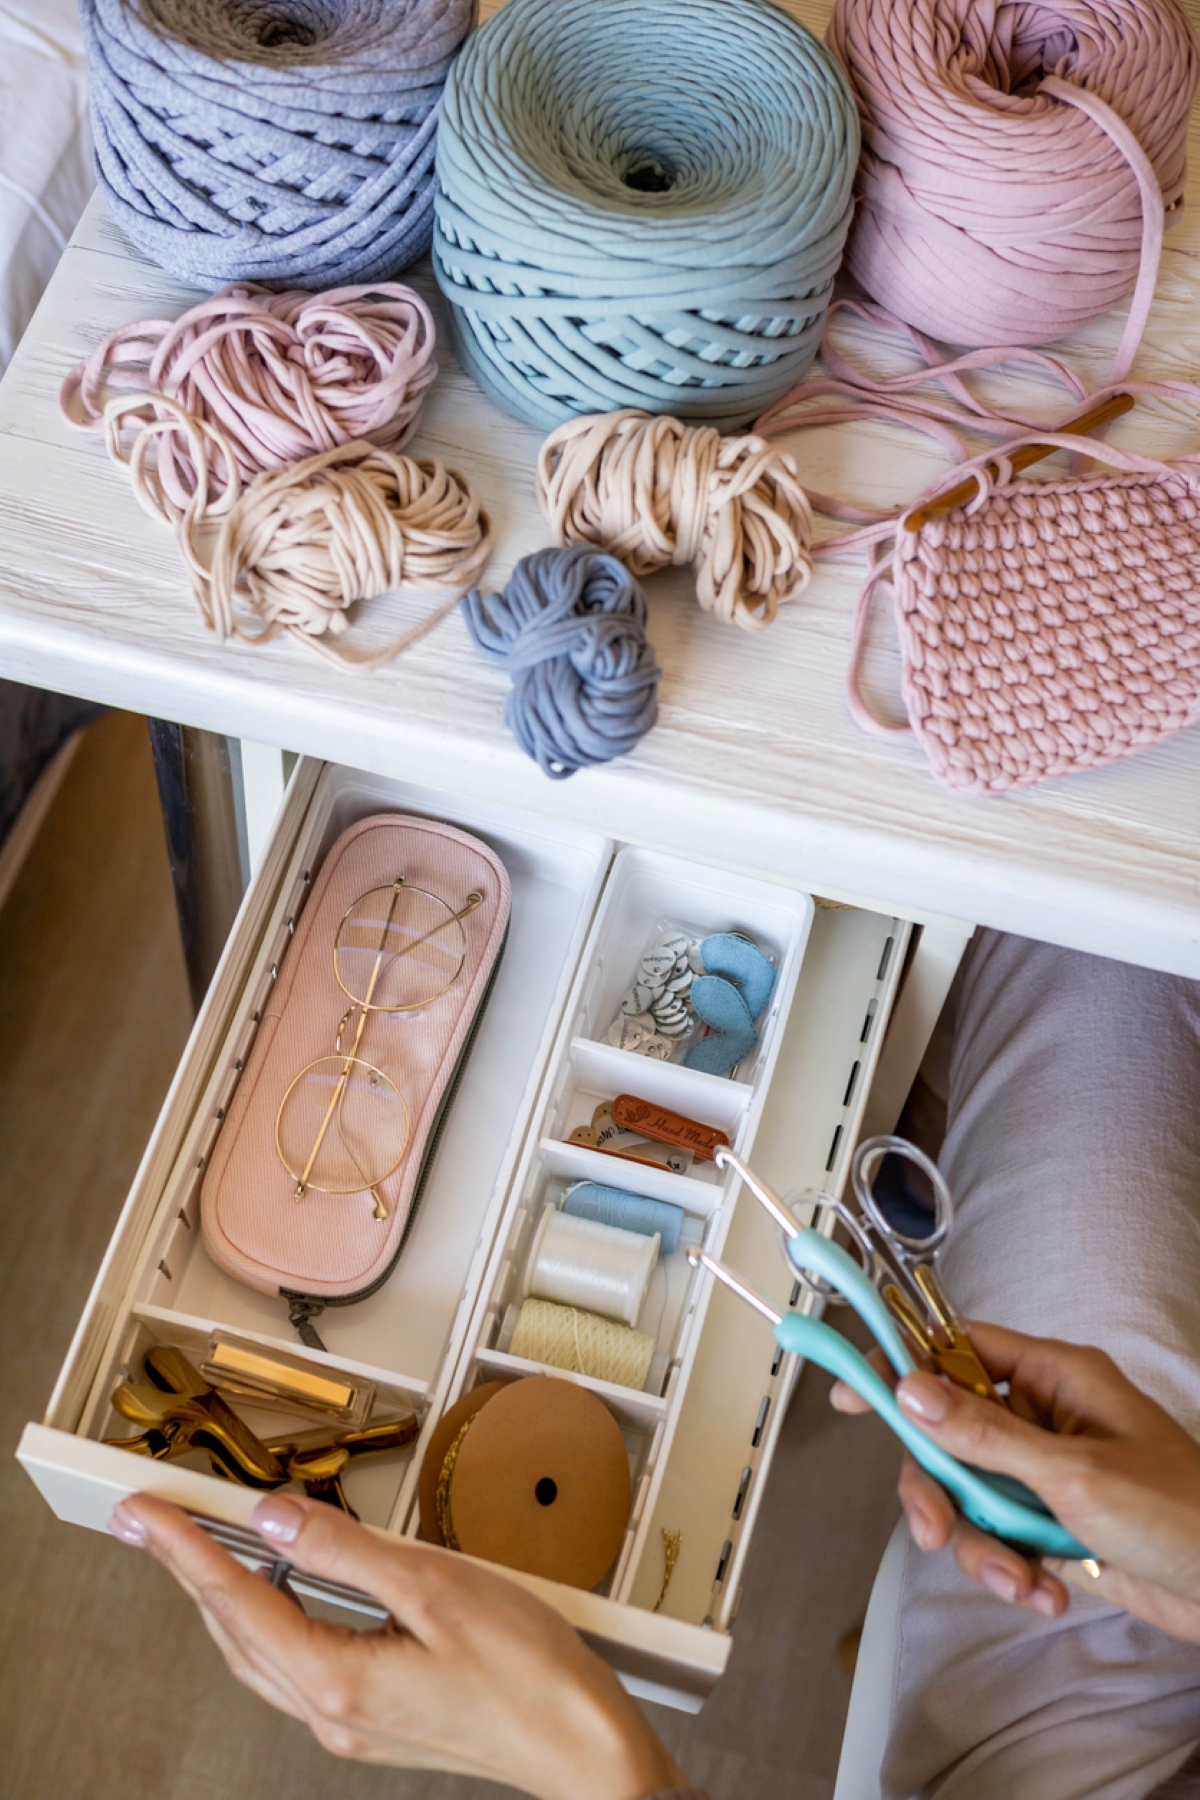 craft room ideas - crochet yarn and tools